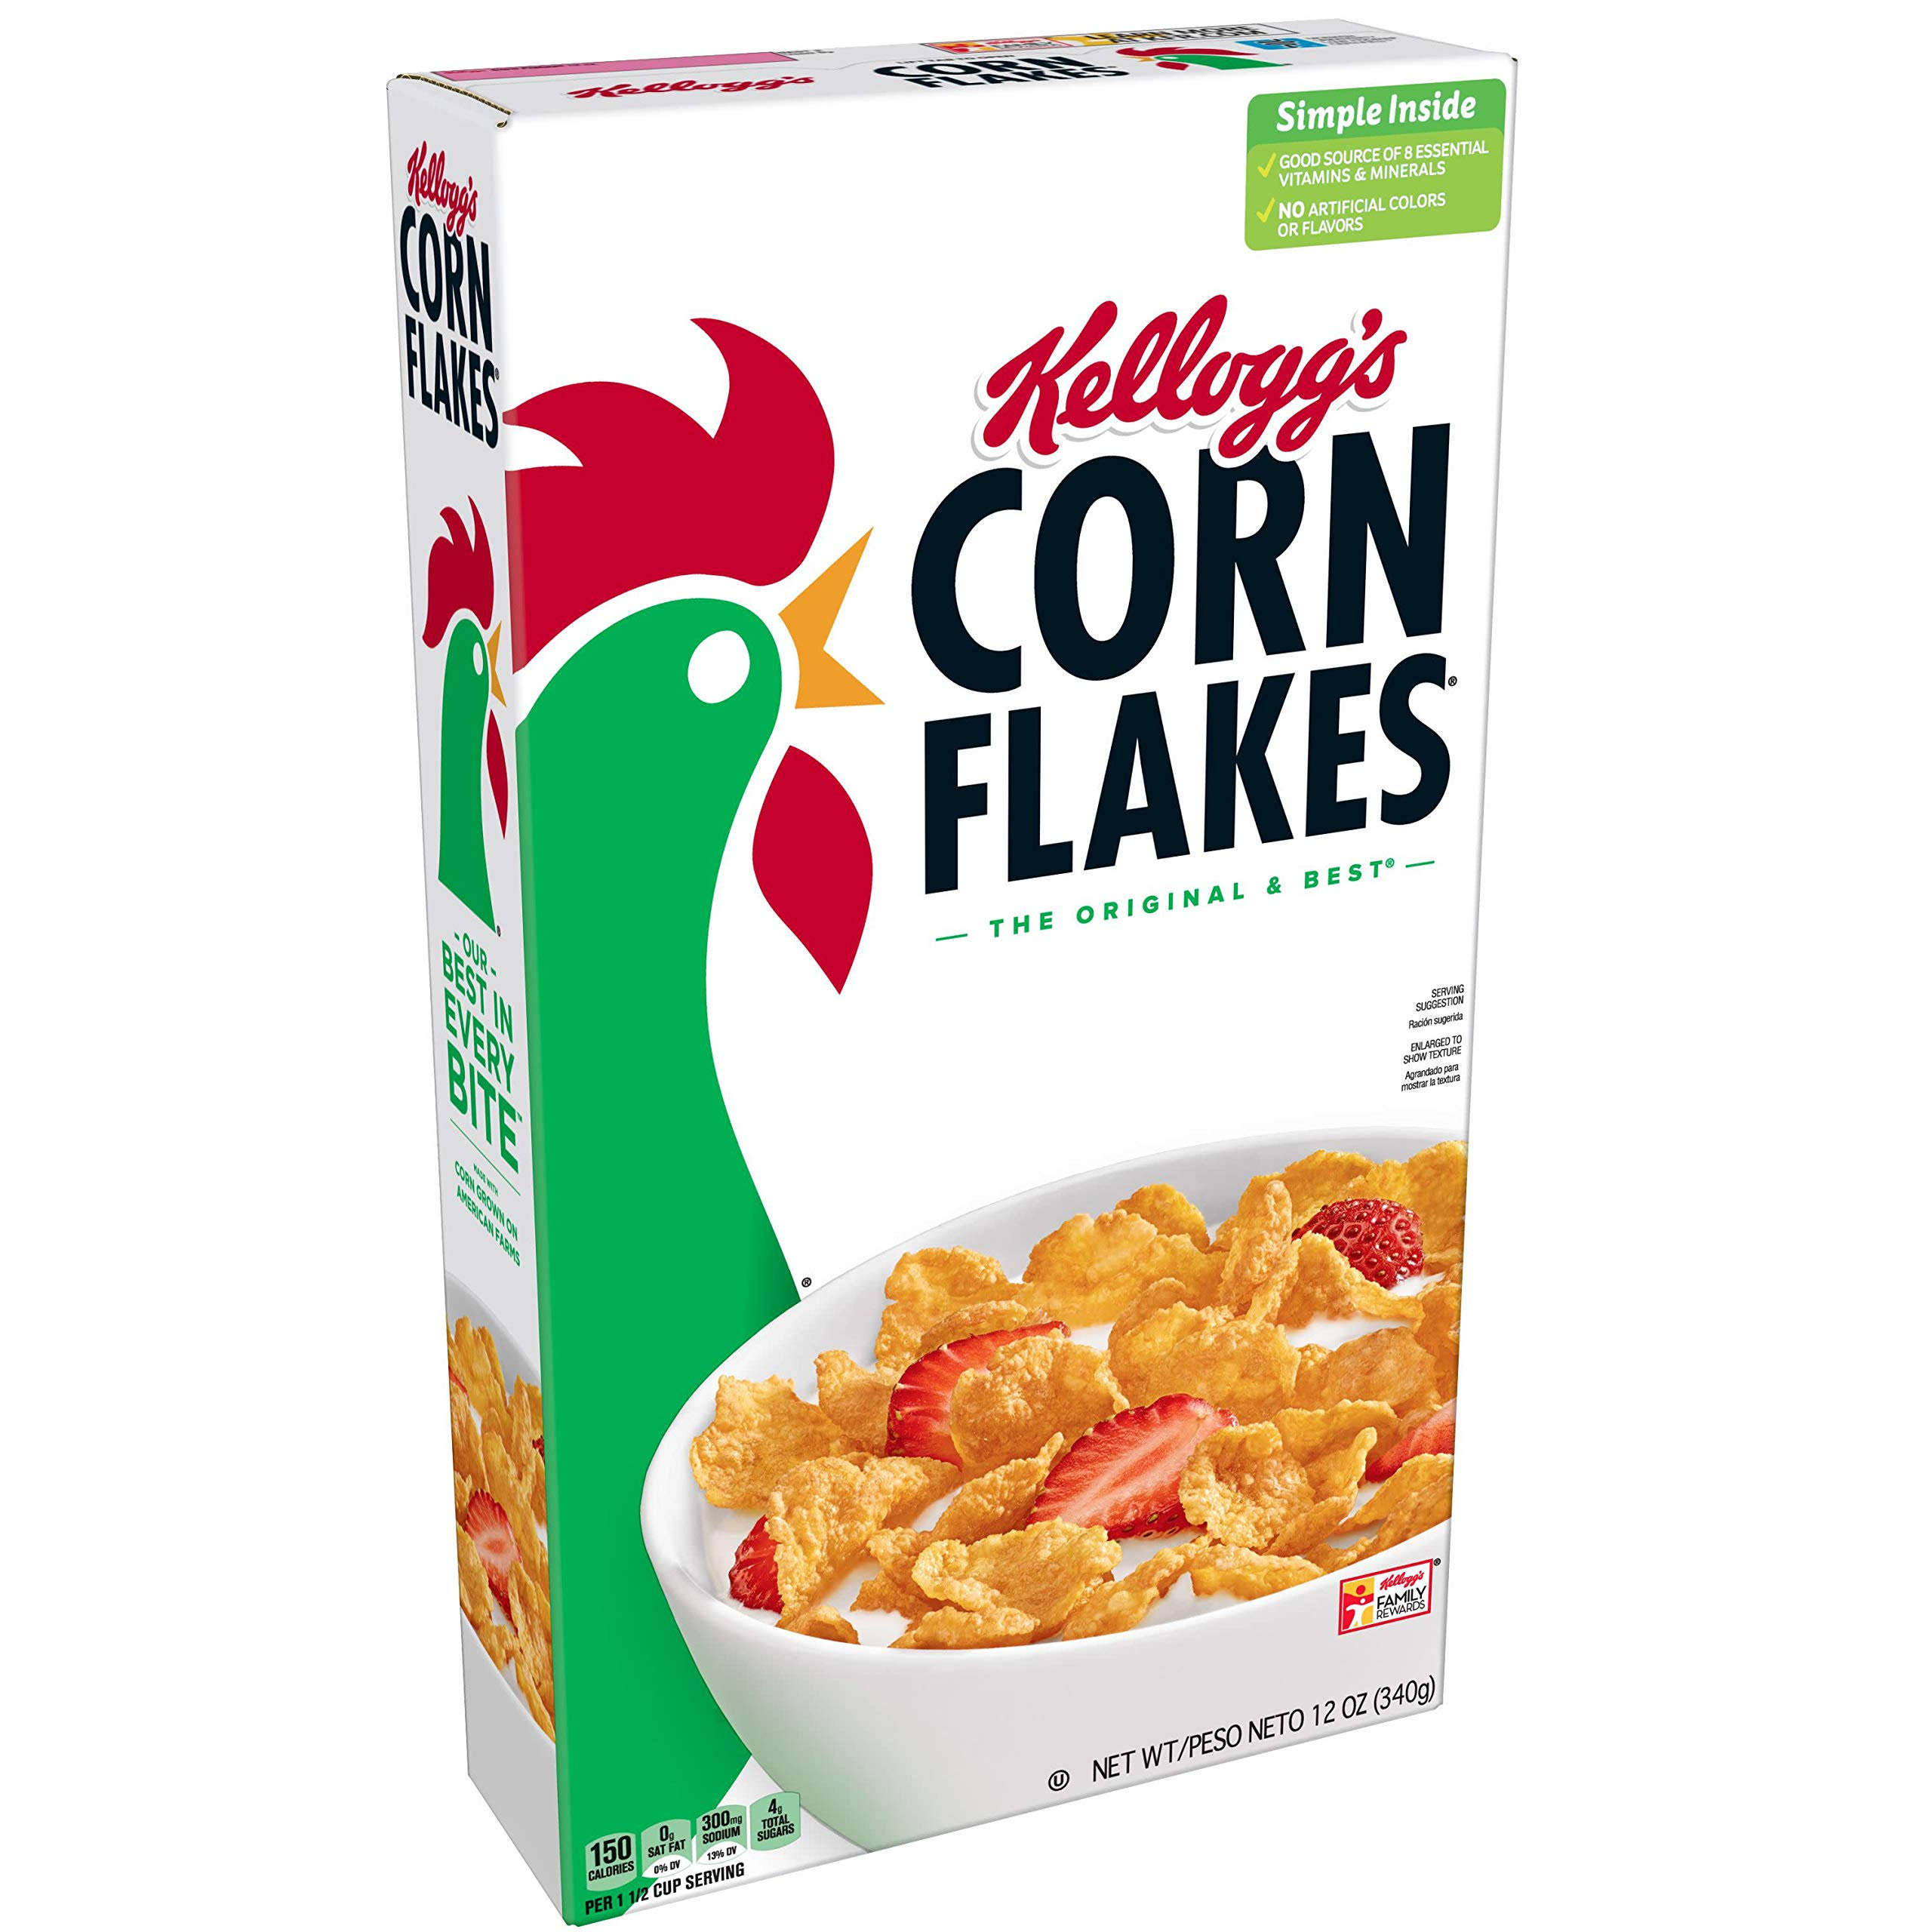 Kellogg's The Original & Best Corn Flakes - 12 oz